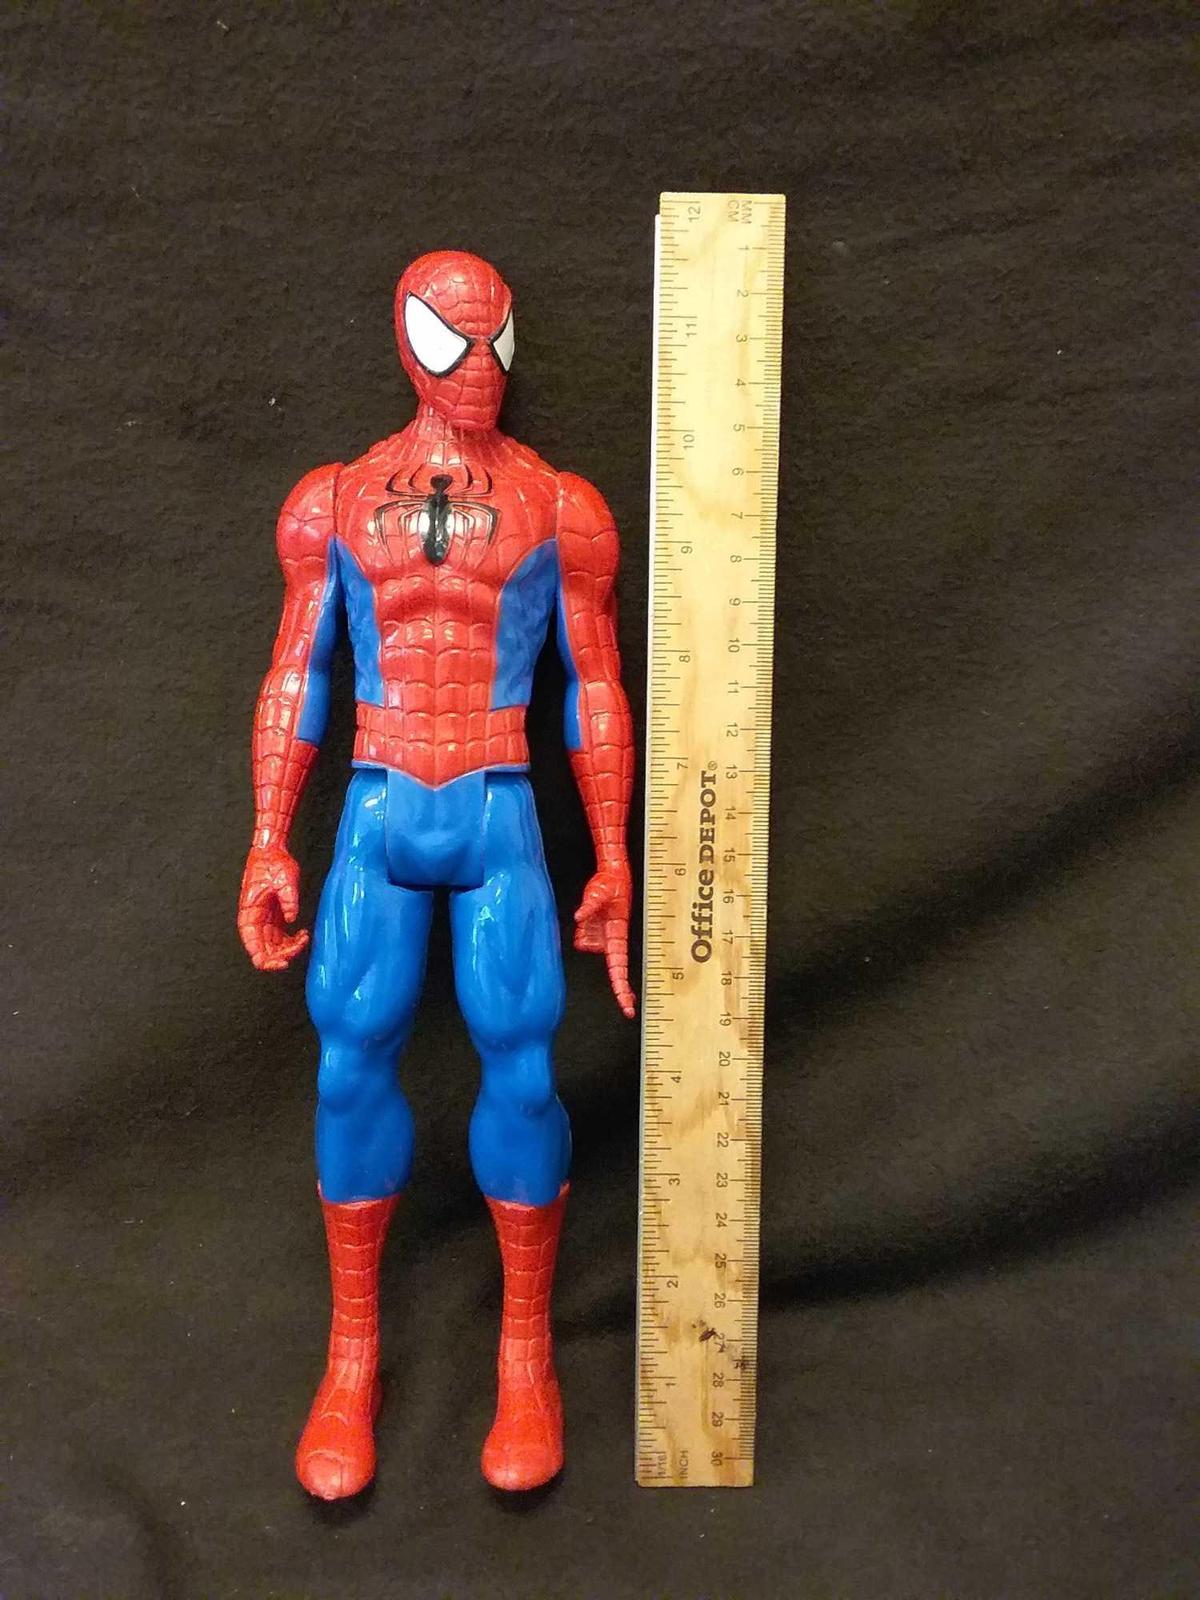 12 Inch Spider-Man Action Figure Toy